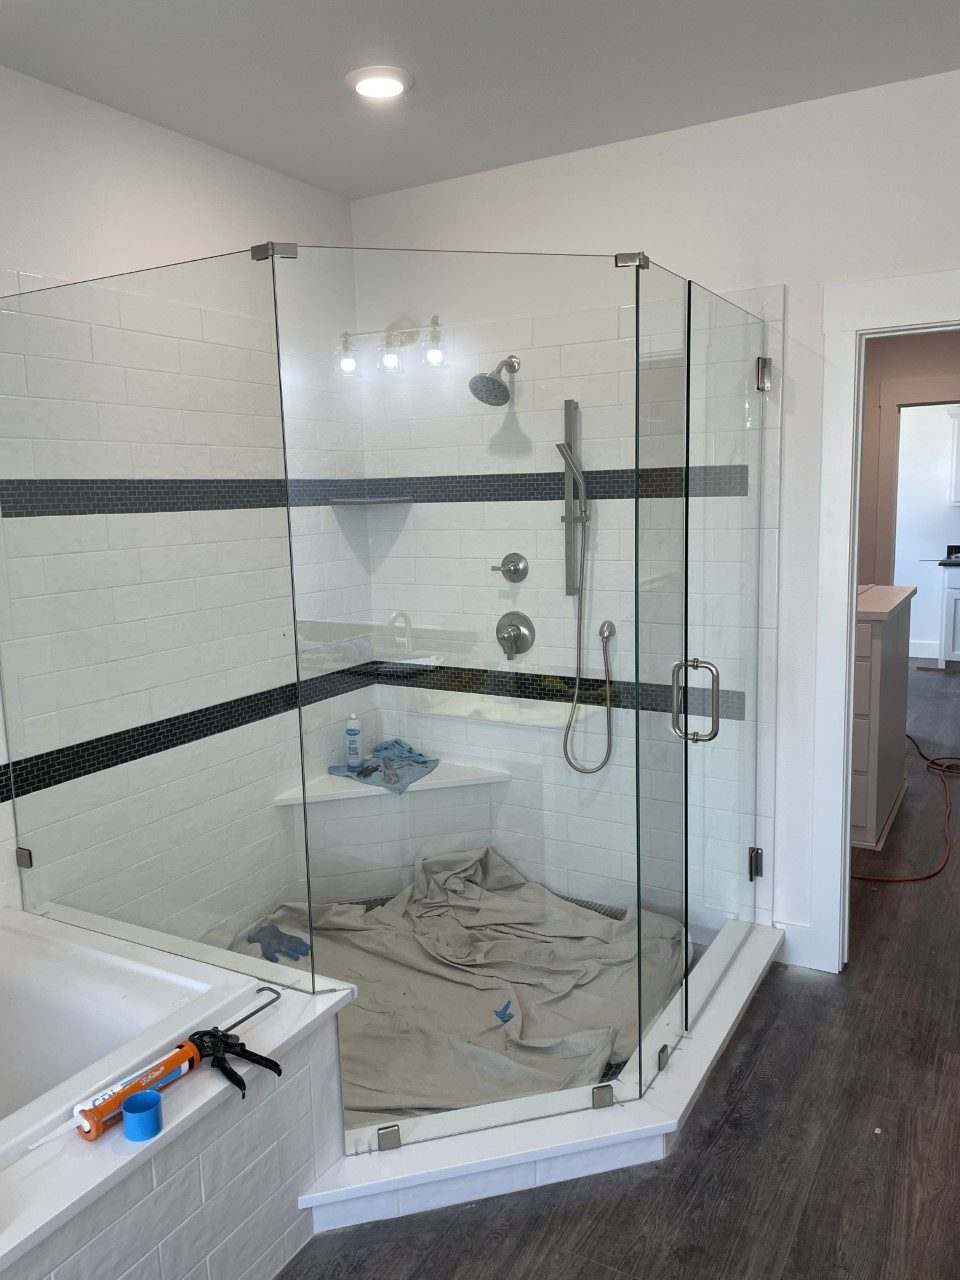 No.1 Best Quality Shower Enclosures In Texas - Plano Bath Llc